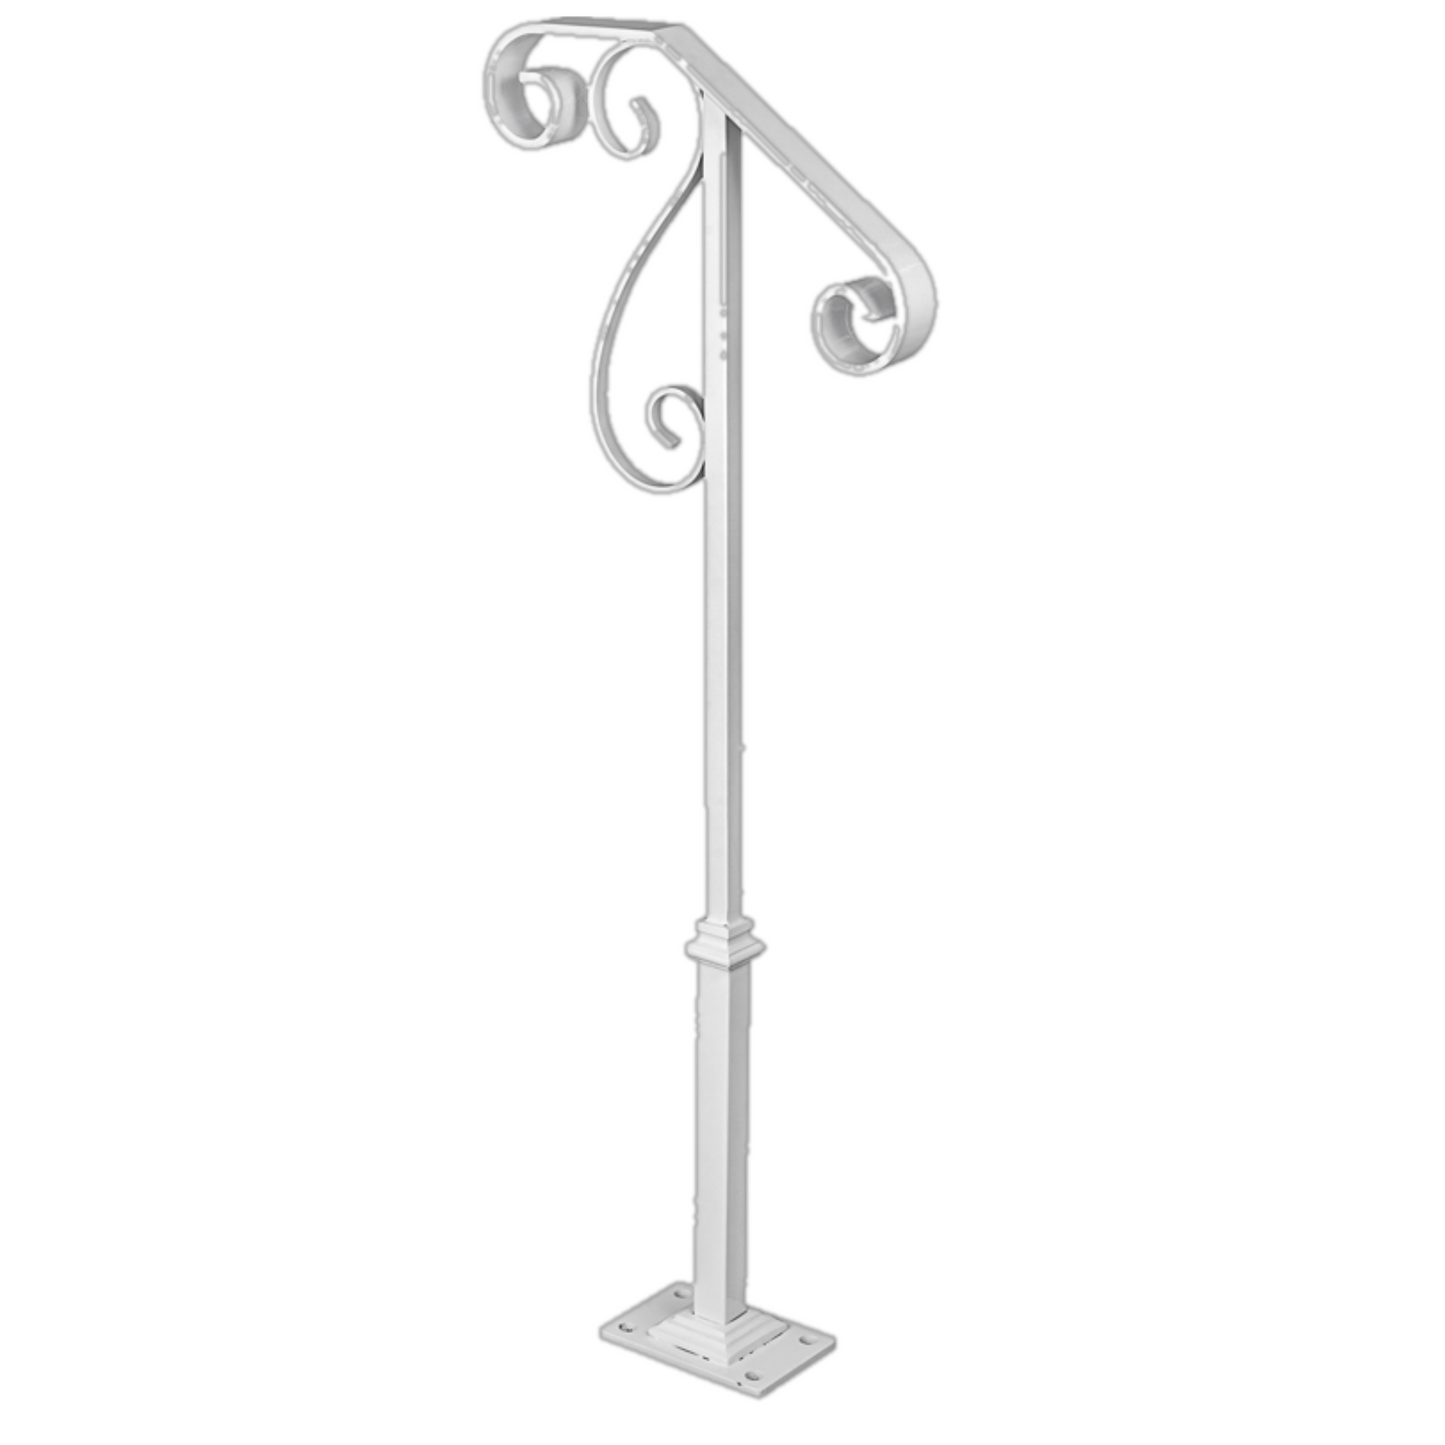 Bocce Court Safety Handrail | Ornamental decorative